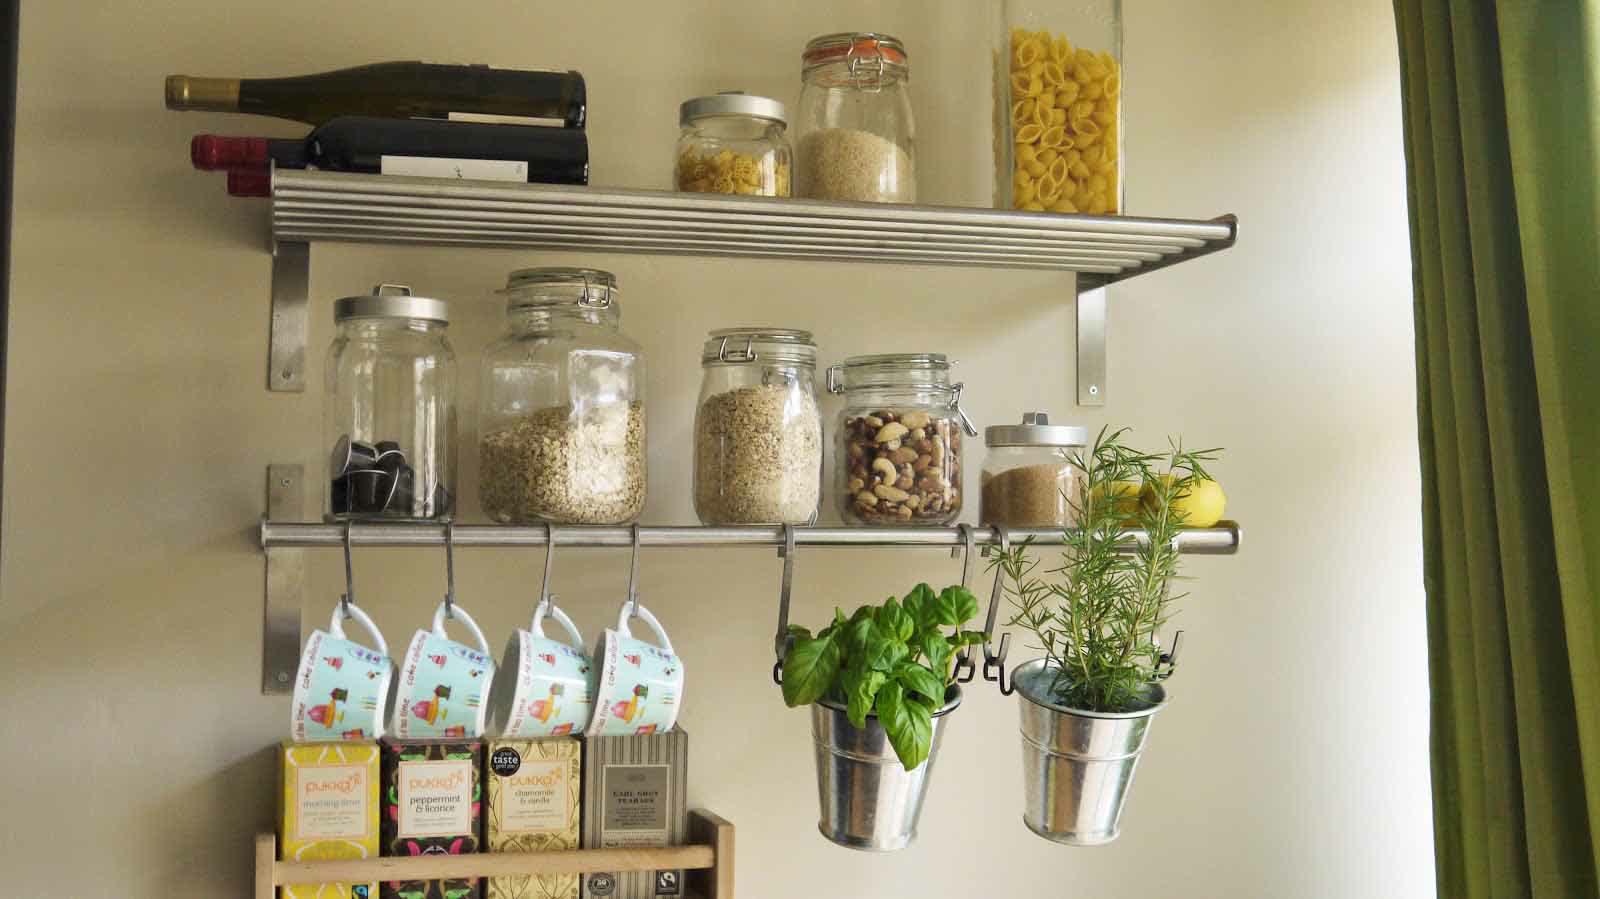 Wall Spice Rack Wooden Shelf Kitchen Organization Idea Essential